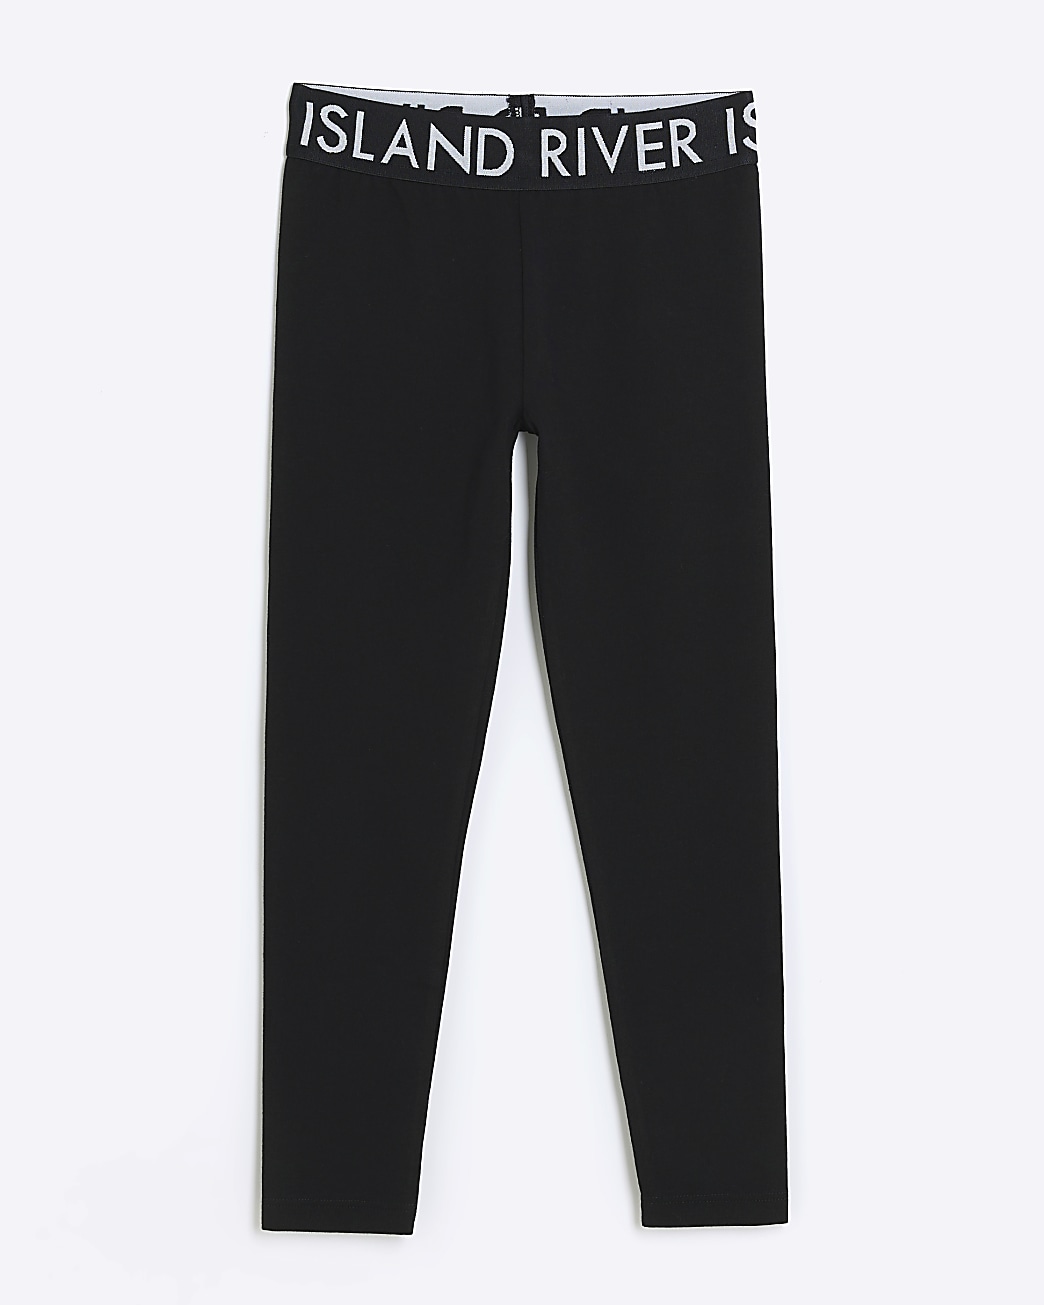 River Island Girls Black Juicy Couture Leggings